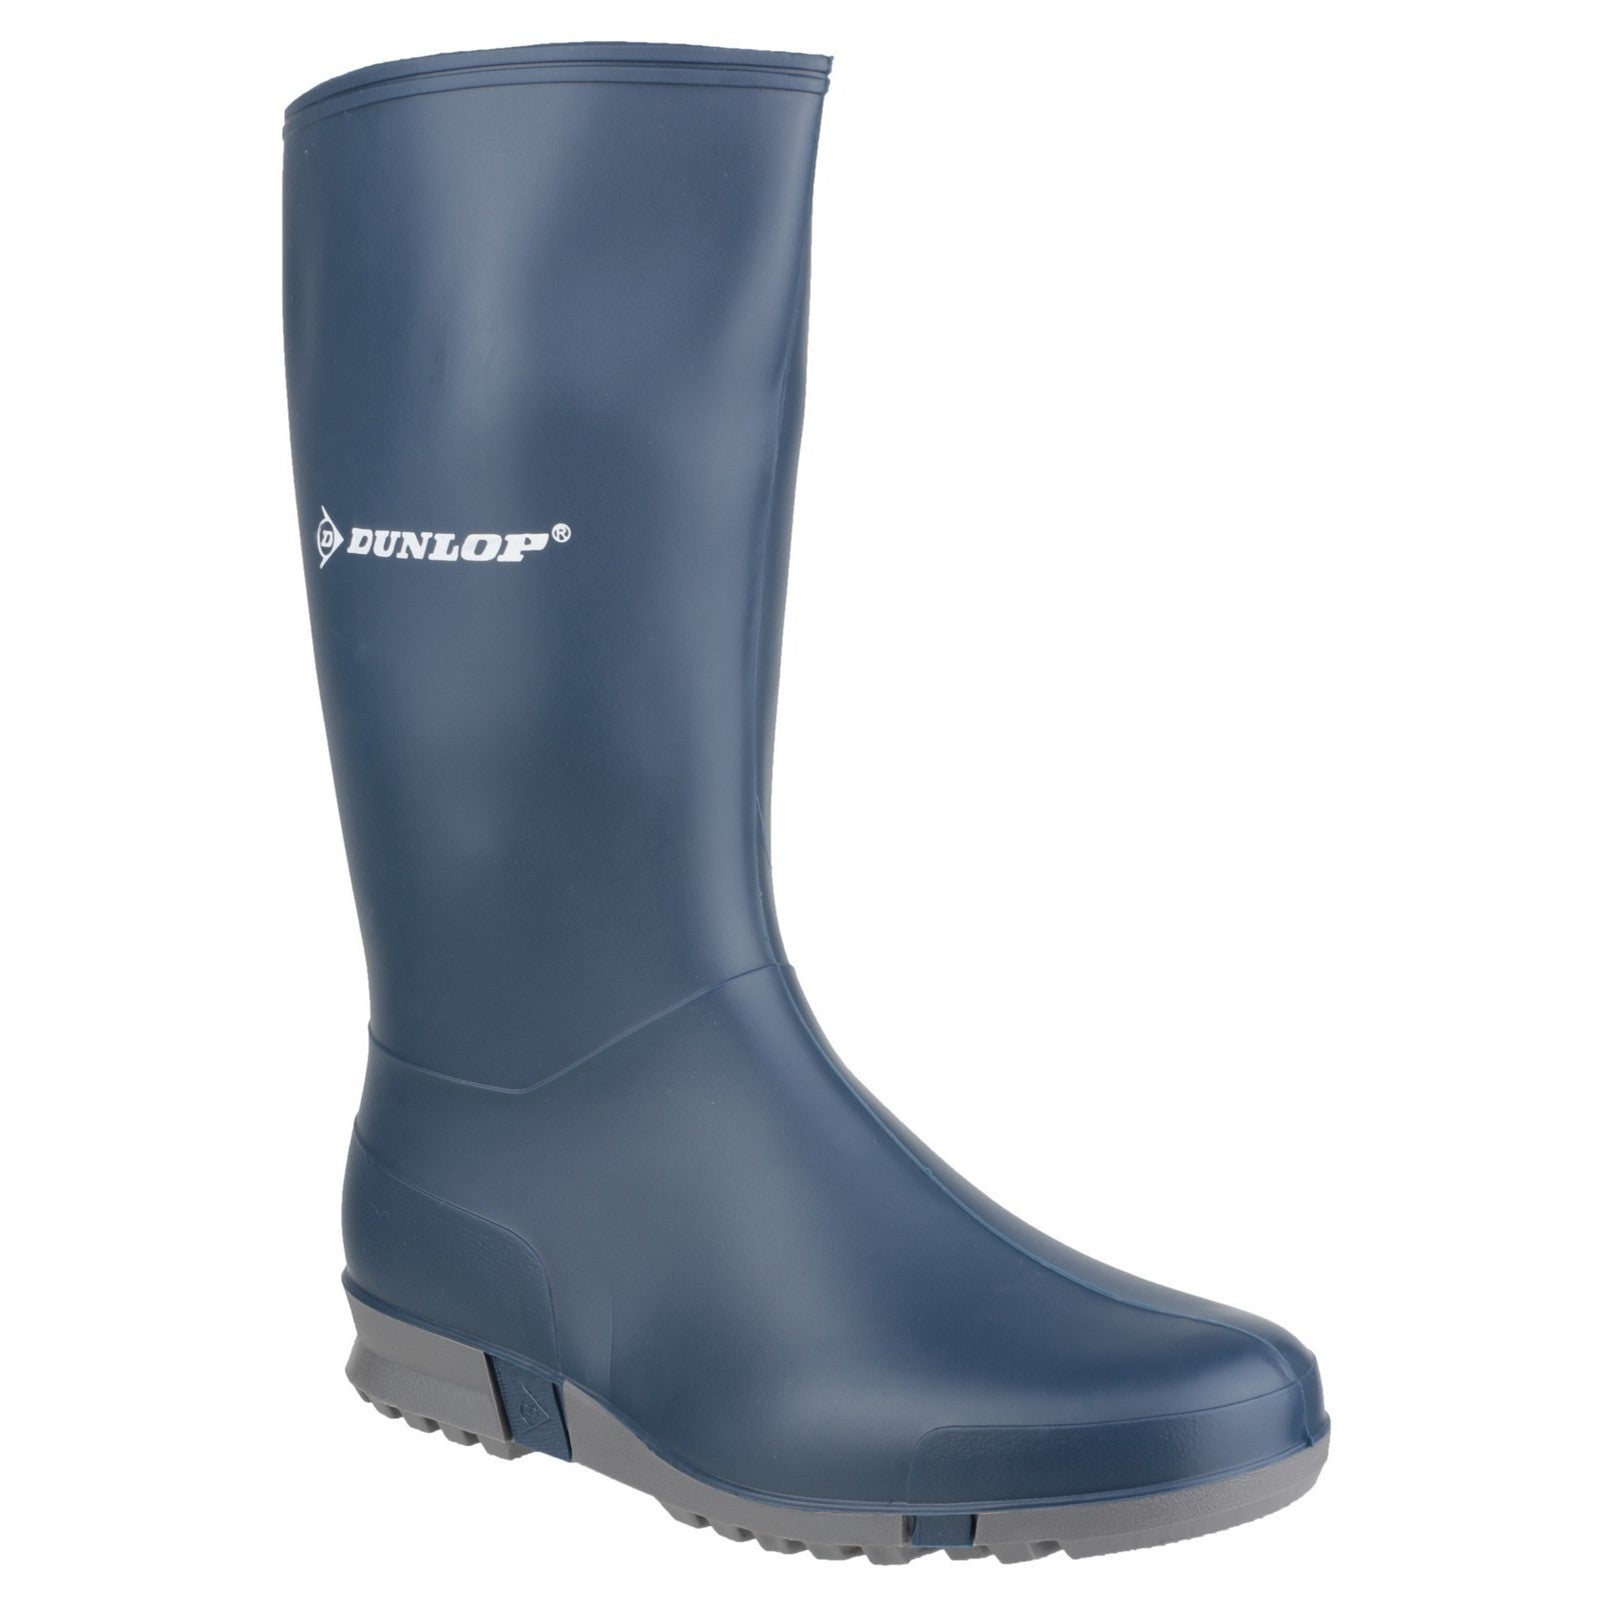 Dunlop Protective Footwear Sport Wellington Boots